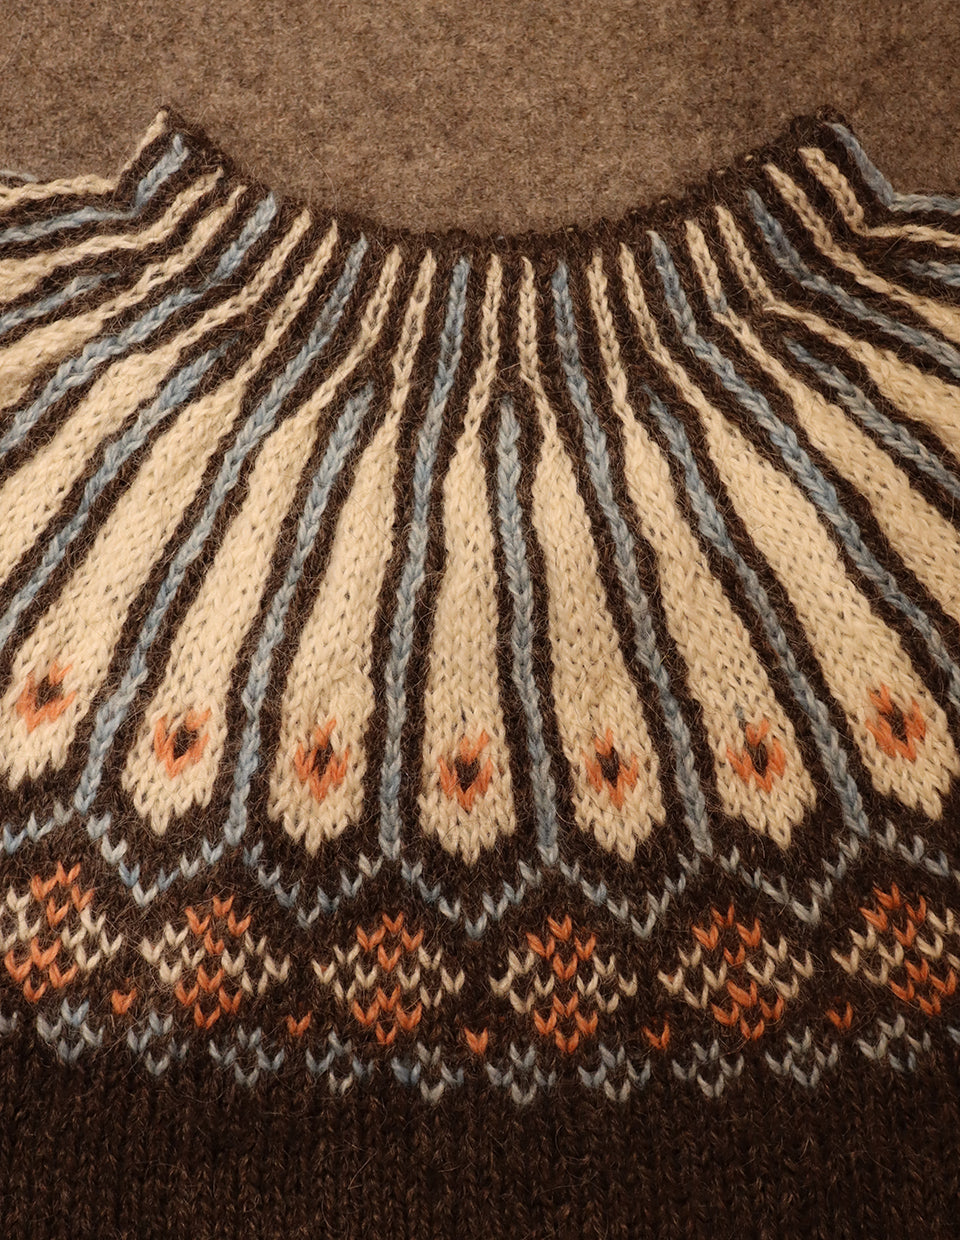 RAKEL, sweater in Old Norse wool, knitting kit